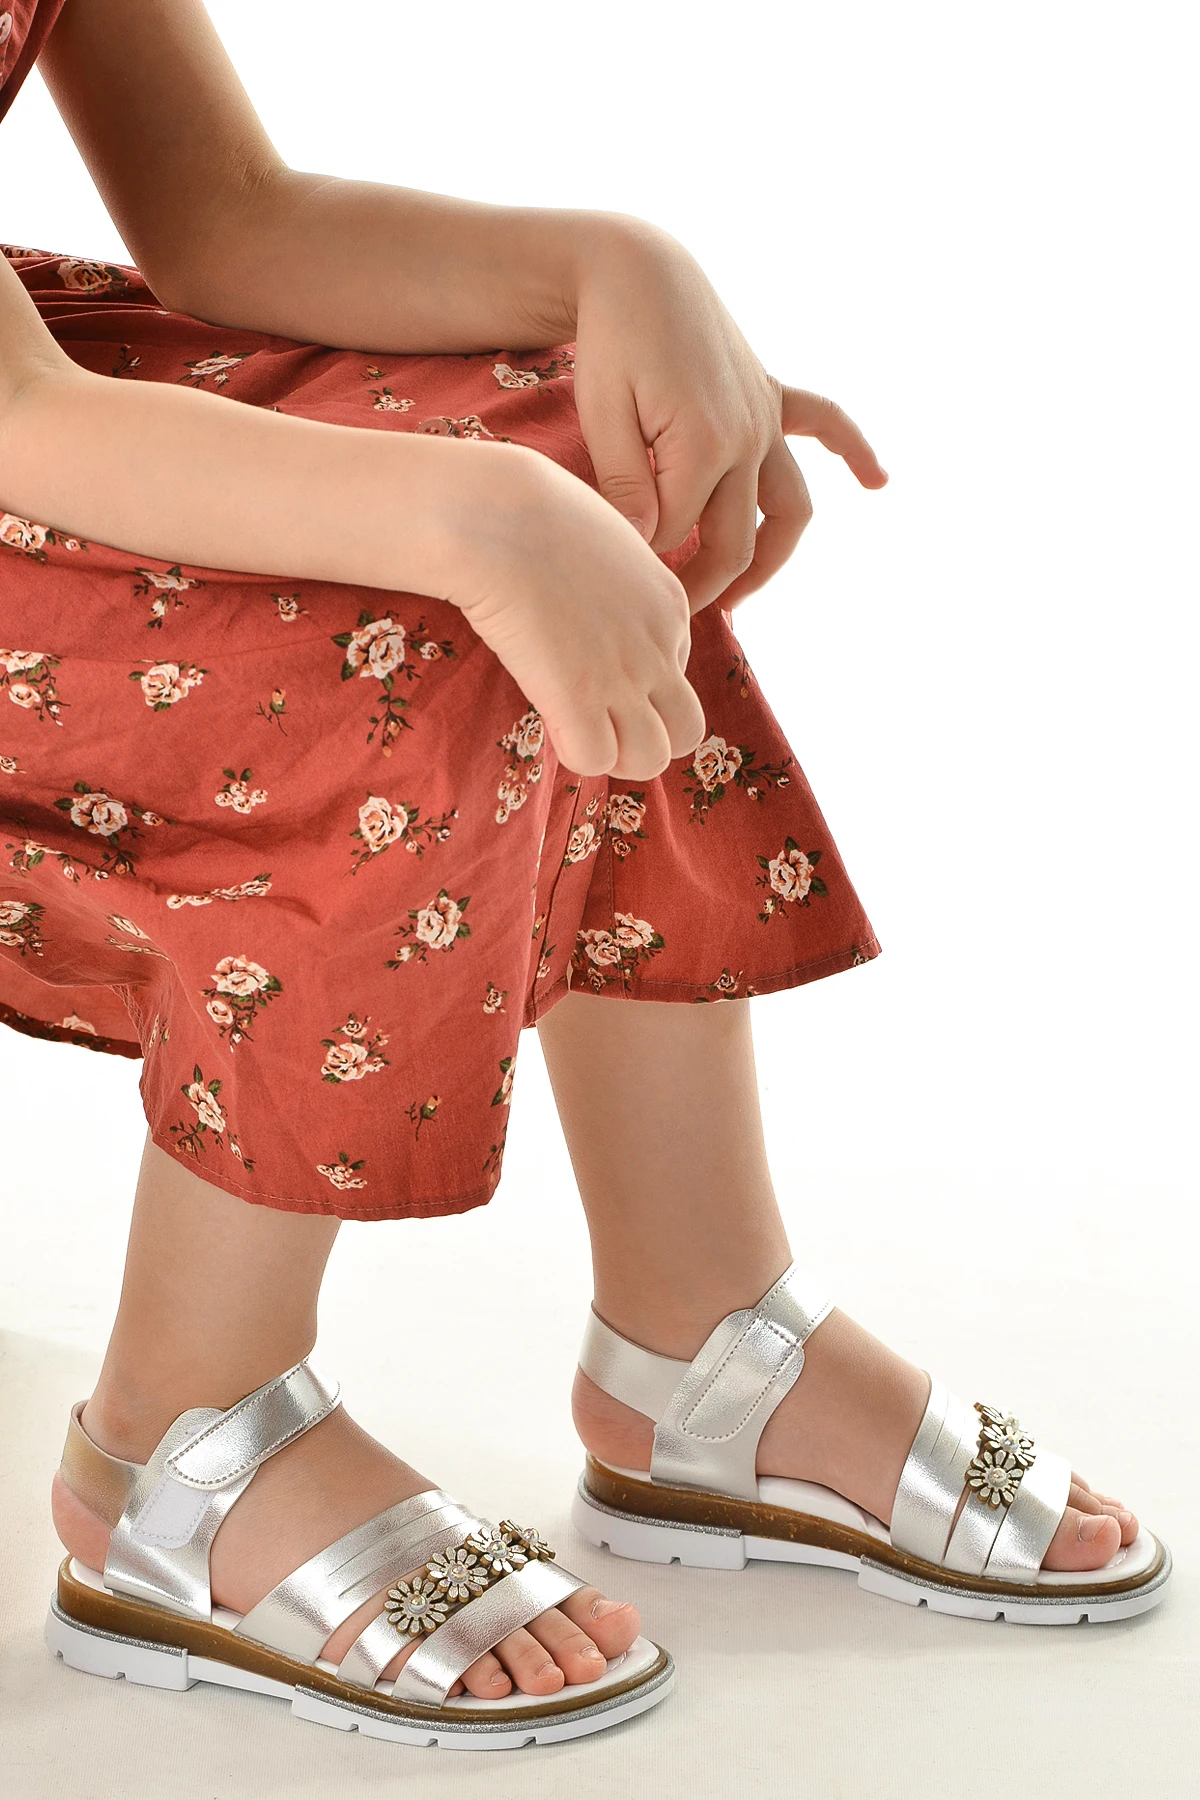 

Kiko Lf 2450-58 Orto pedik Female Child sandals Slippers children's Sandals, sandals for children , girls sandals, sandals for boy